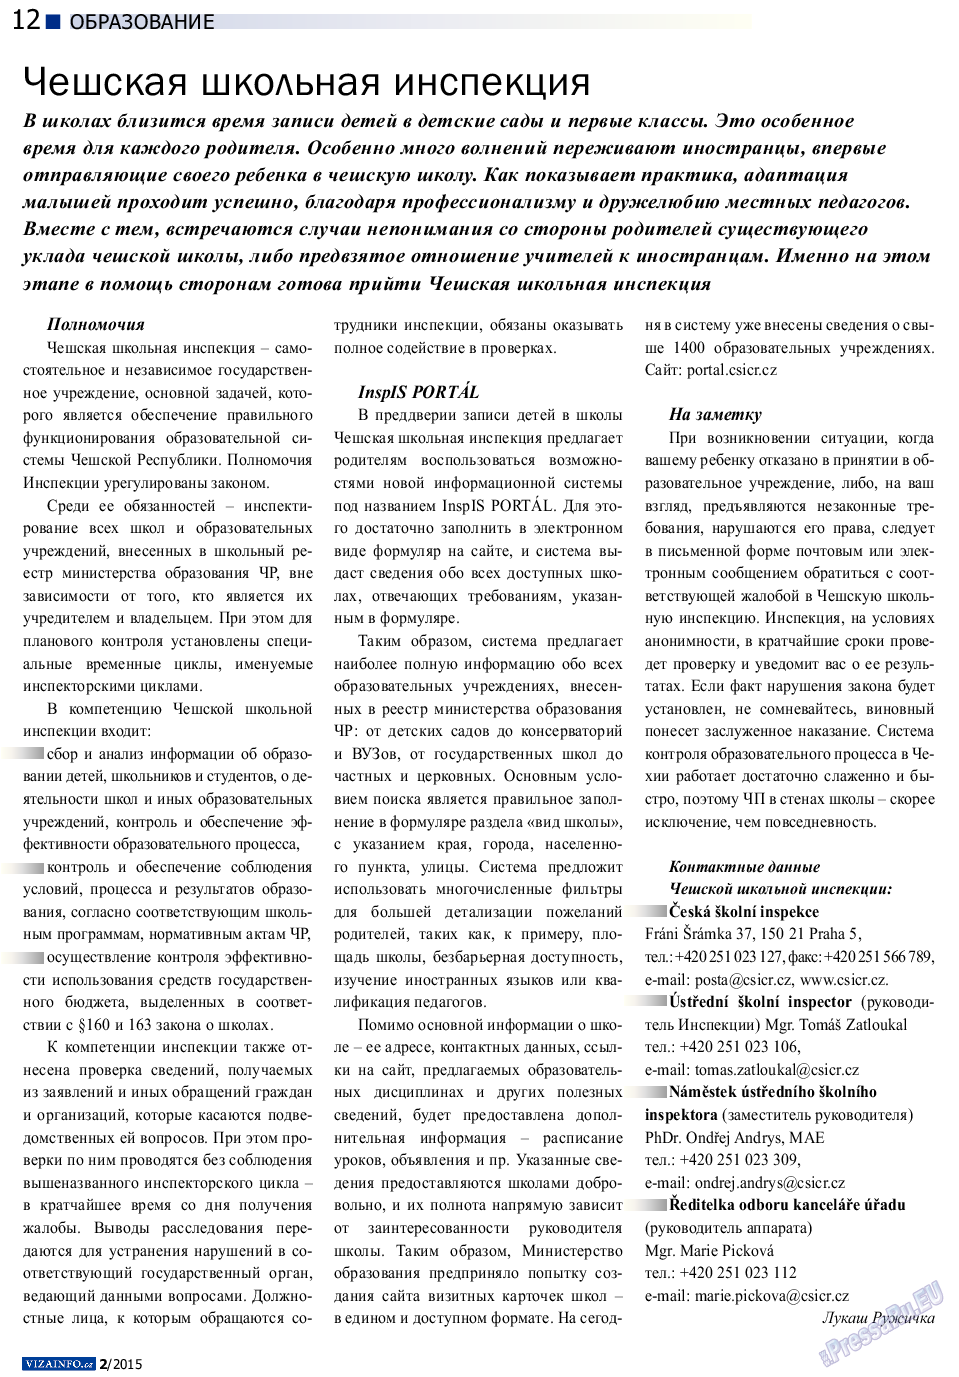 Vizainfo.cz (газета). 2015 год, номер 65, стр. 12